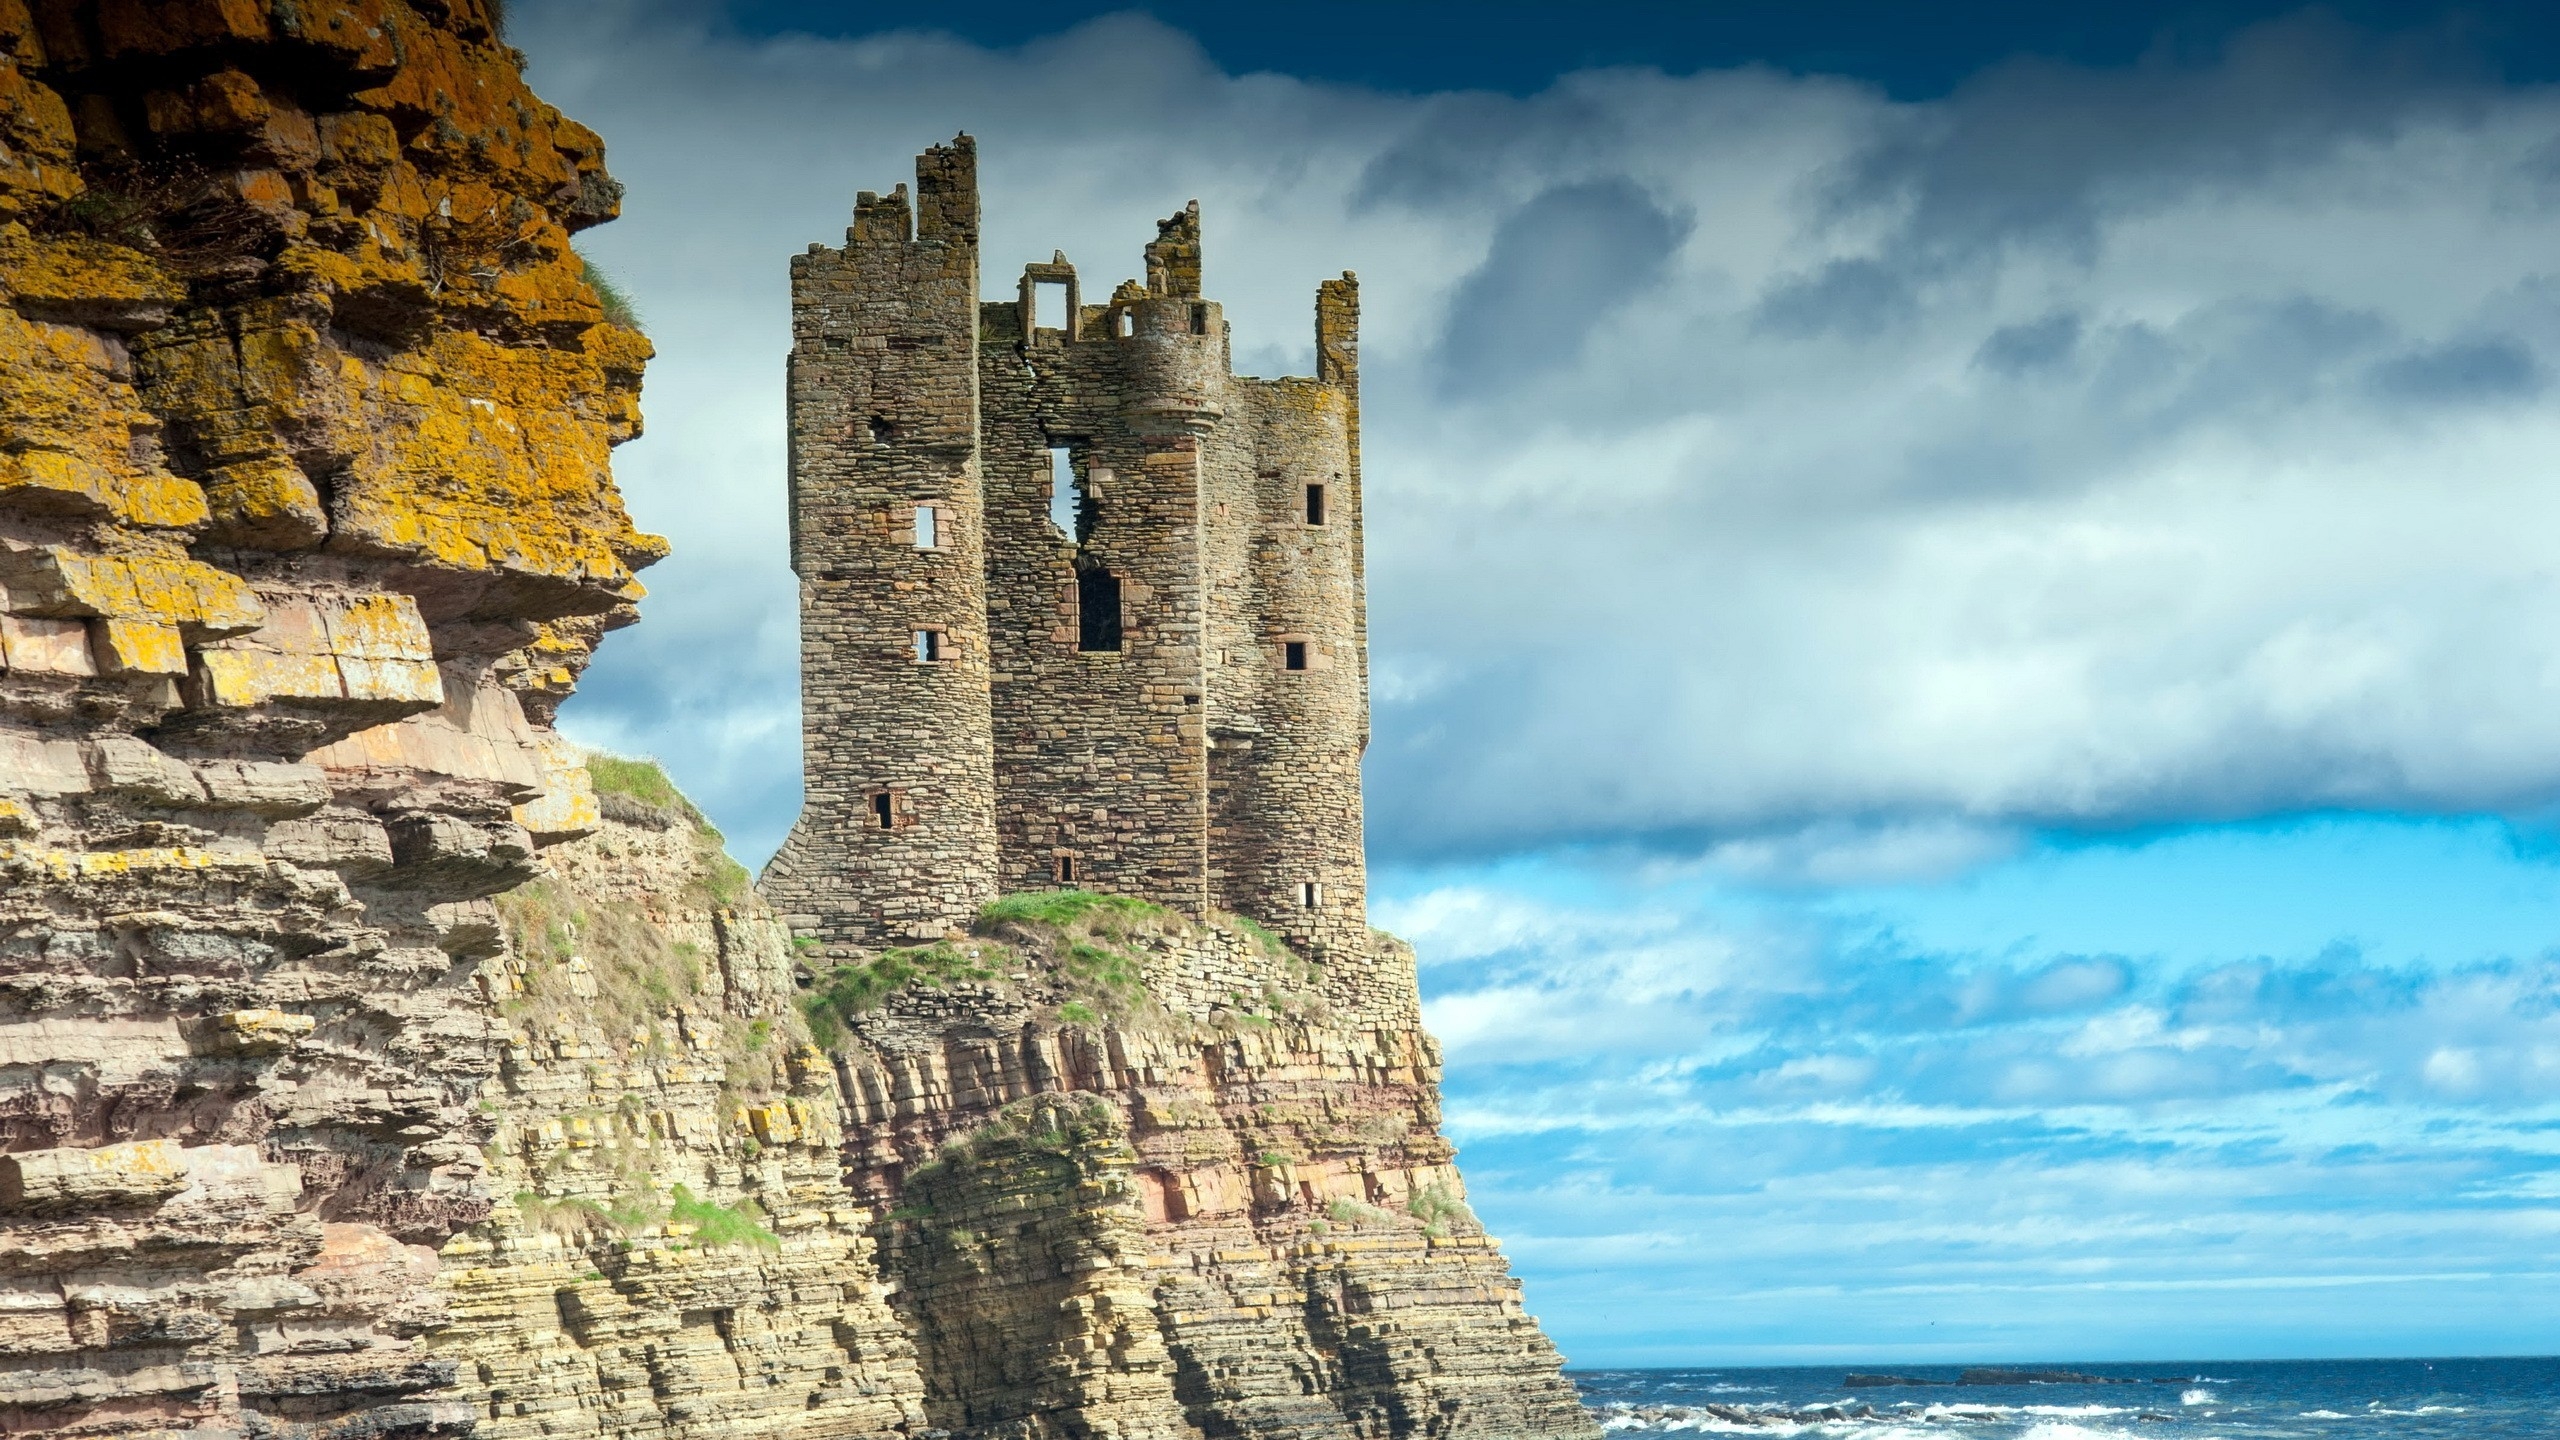 Keiss Castle Scotland for 2560x1440 HDTV resolution